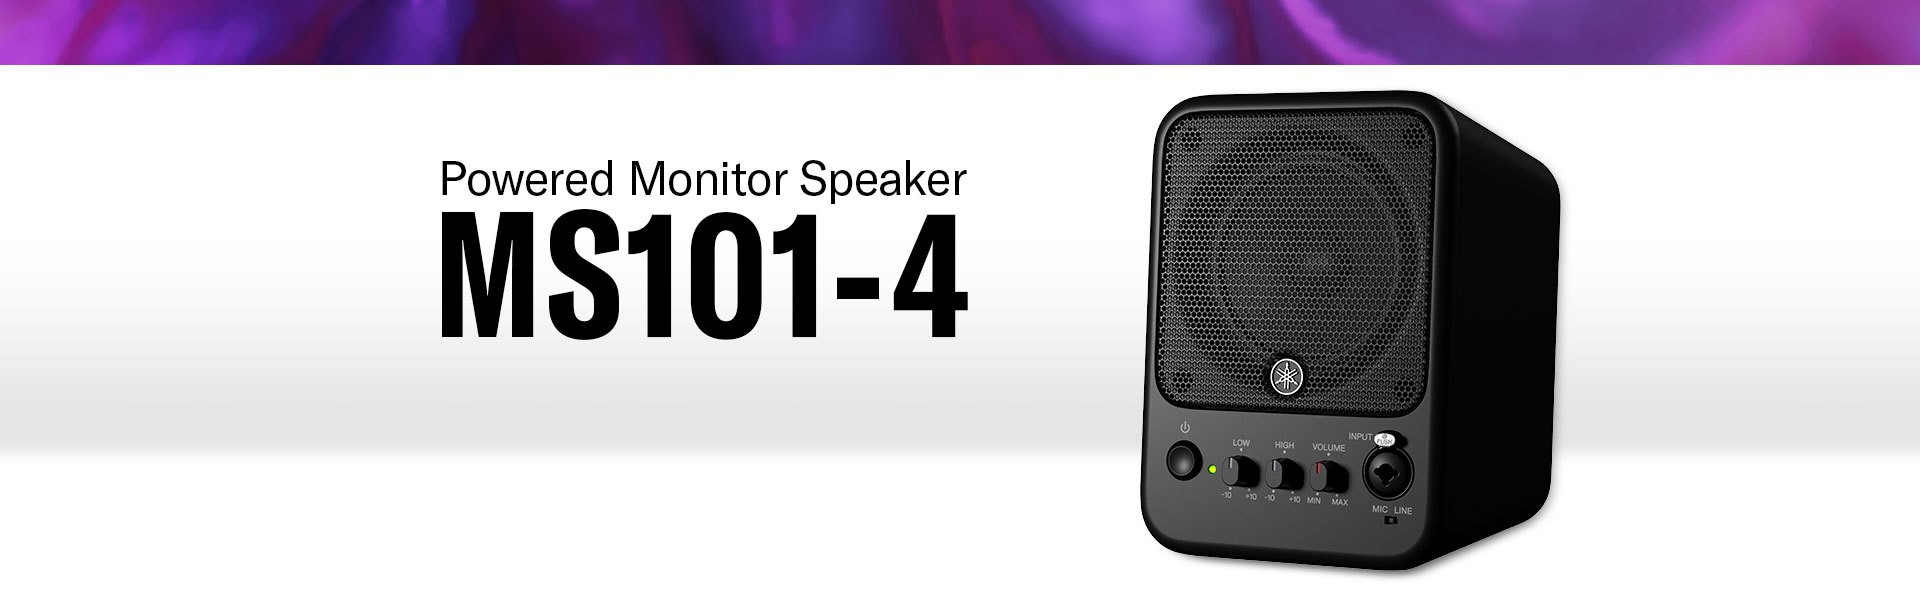 MS101-4 Powered Monitor Speaker - Yamaha USA